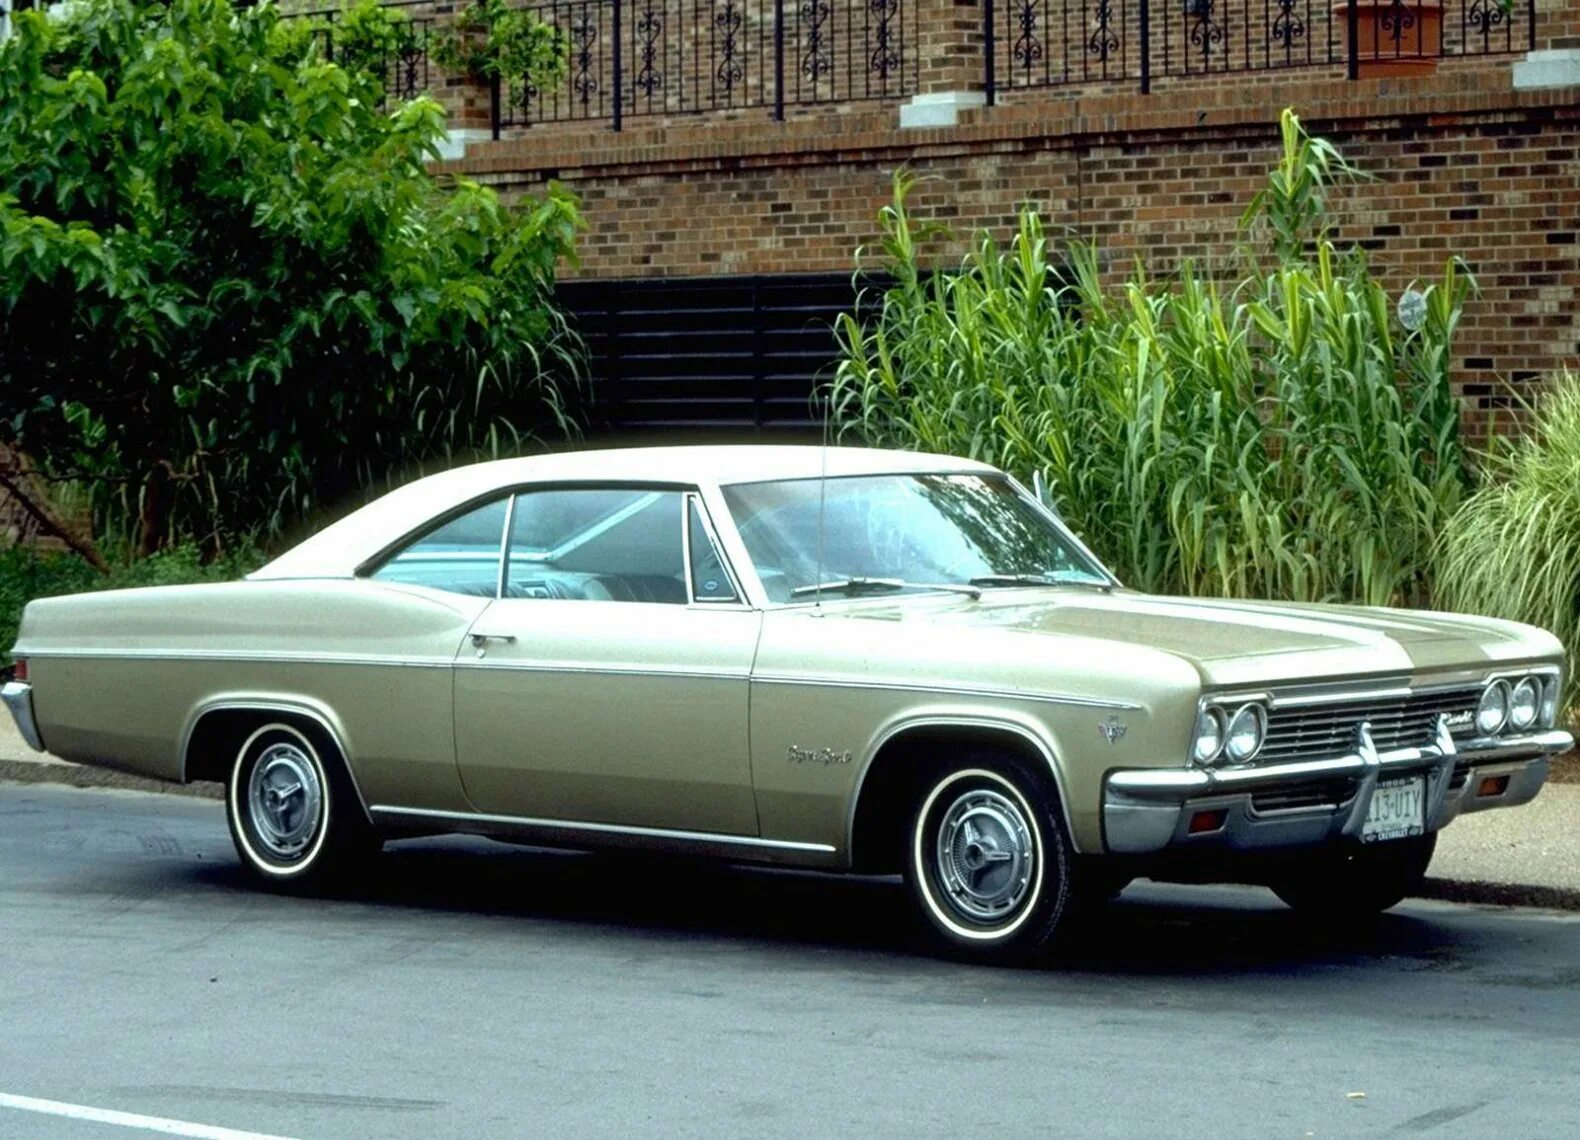 Chevrolet impala год. Chevrolet Impala 1966. Chevrolet Impala SS 1966. Chevrolet Impala 66. Chevrolet Impala super Sport 1966.